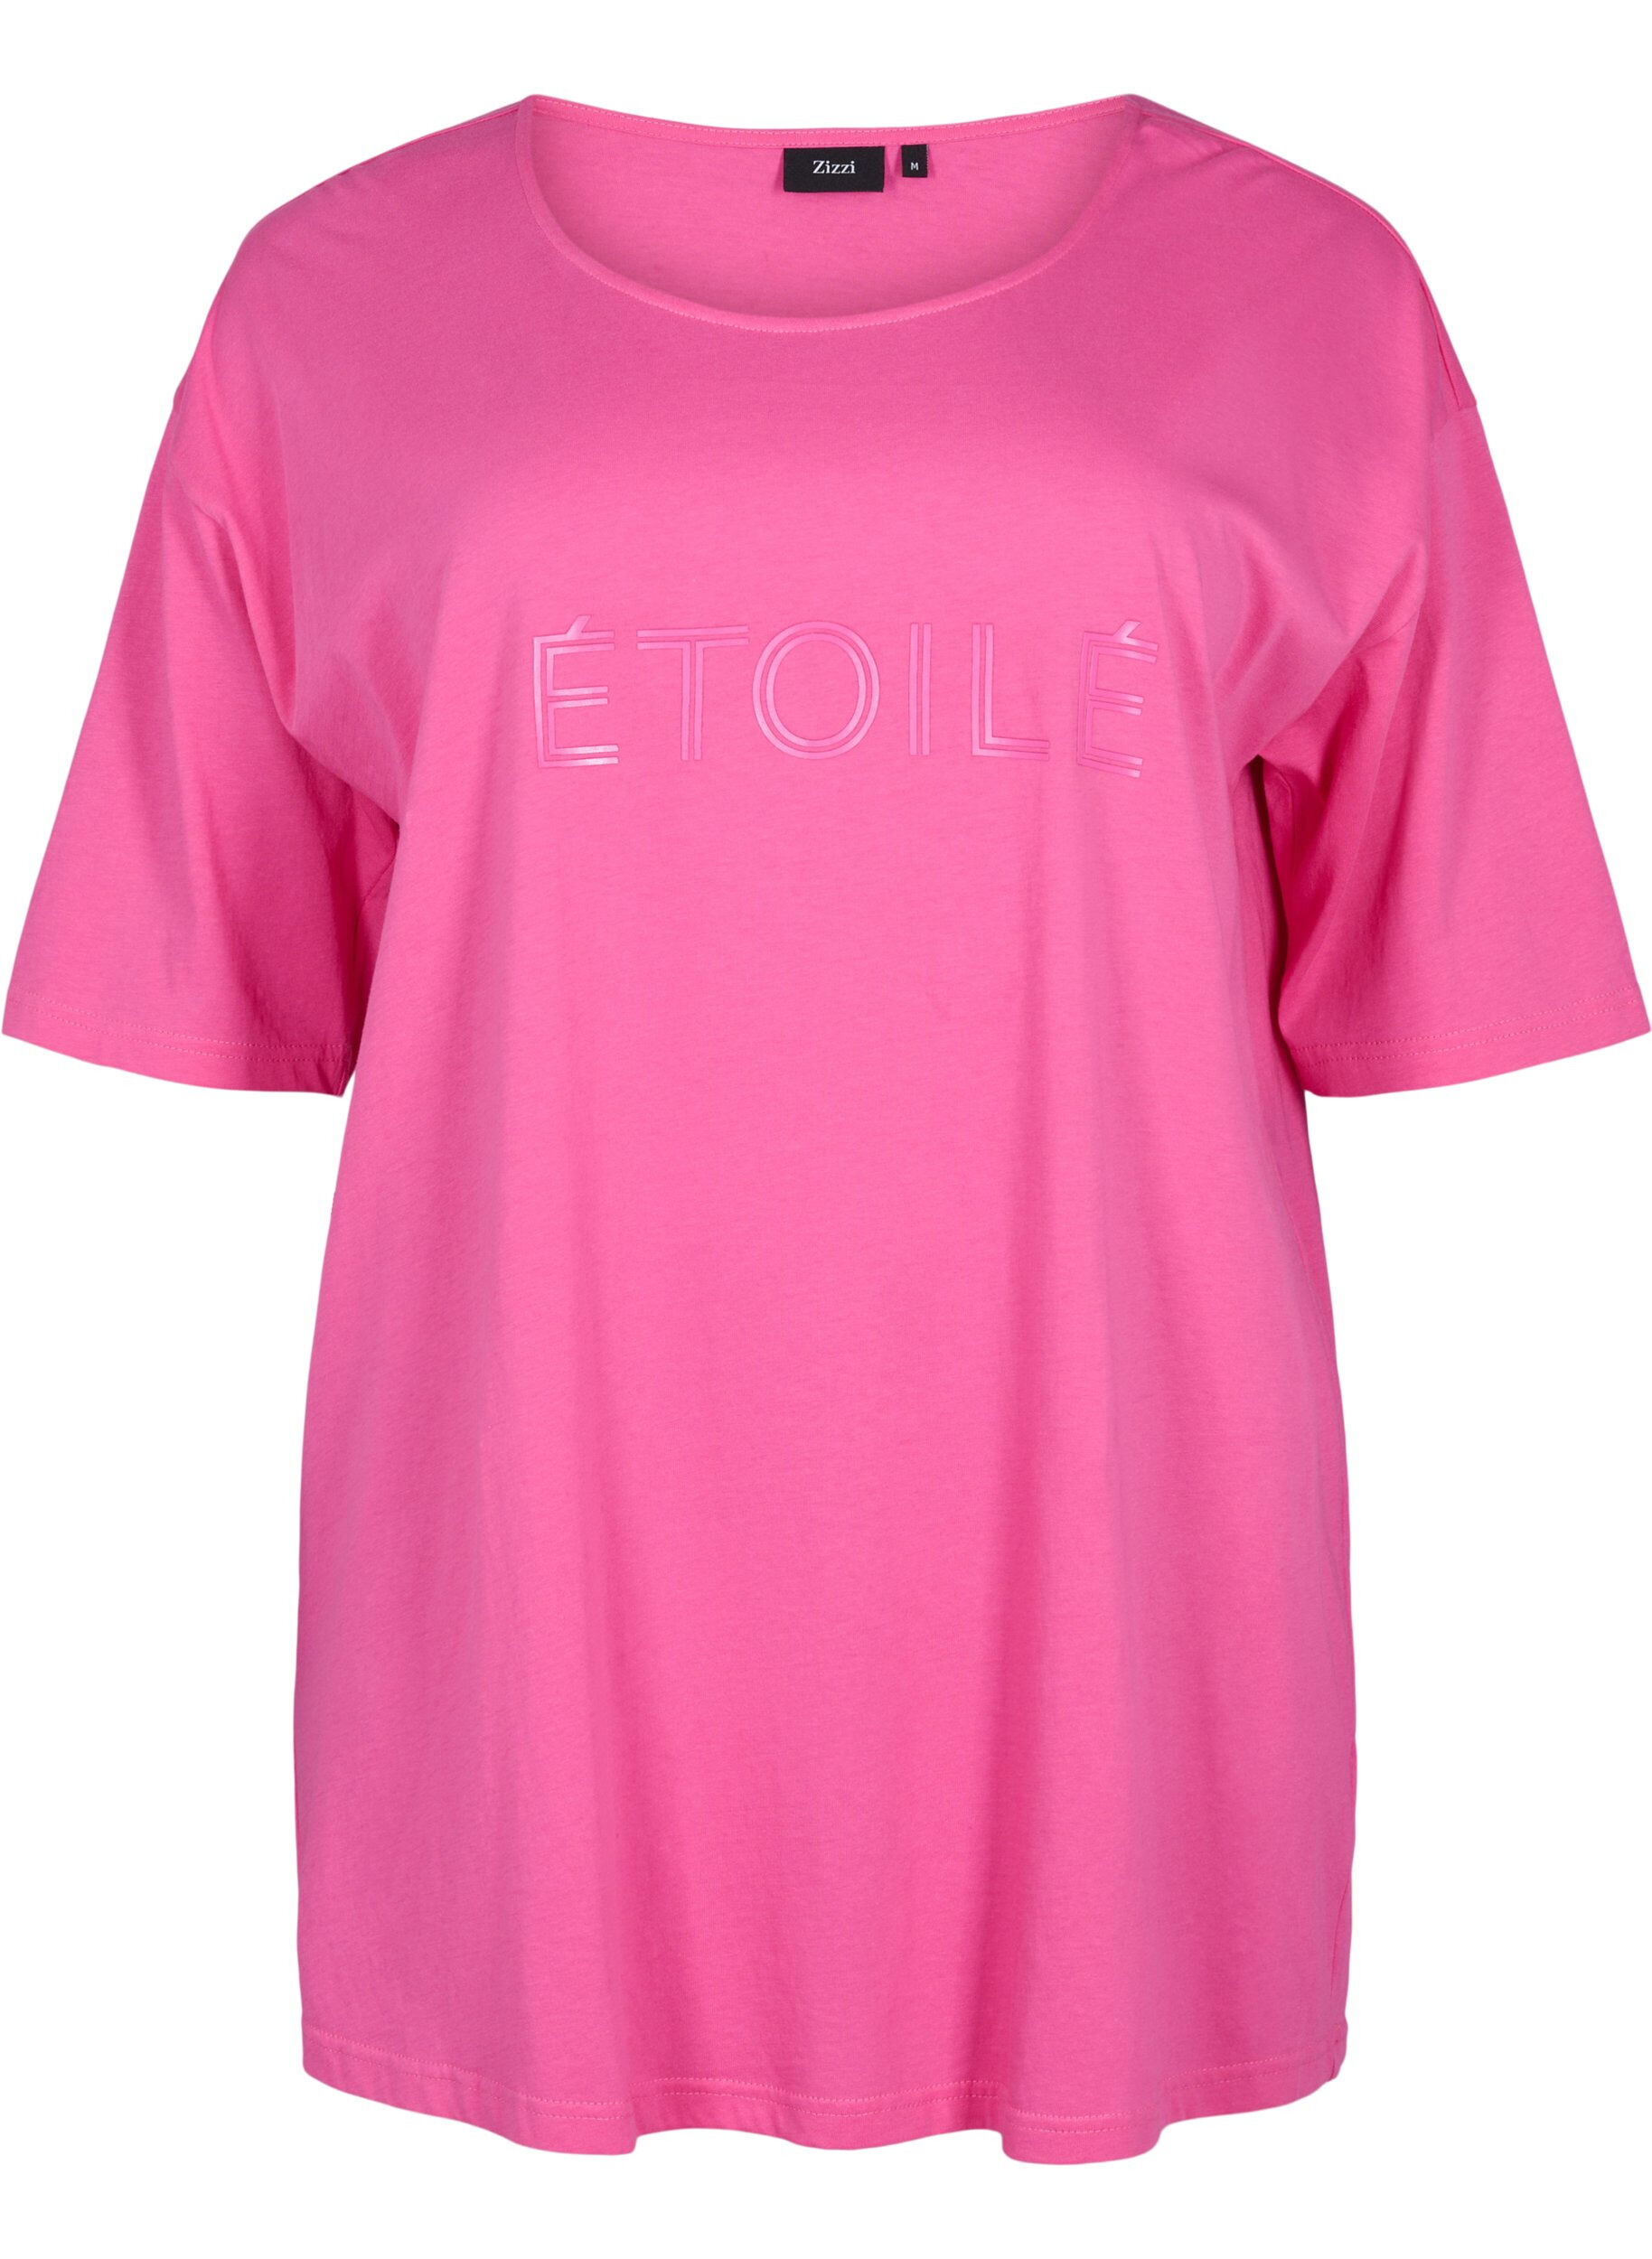 Oversize cotton t-shirt with print - Pink - Sz. 42-60 - Zizzifashion